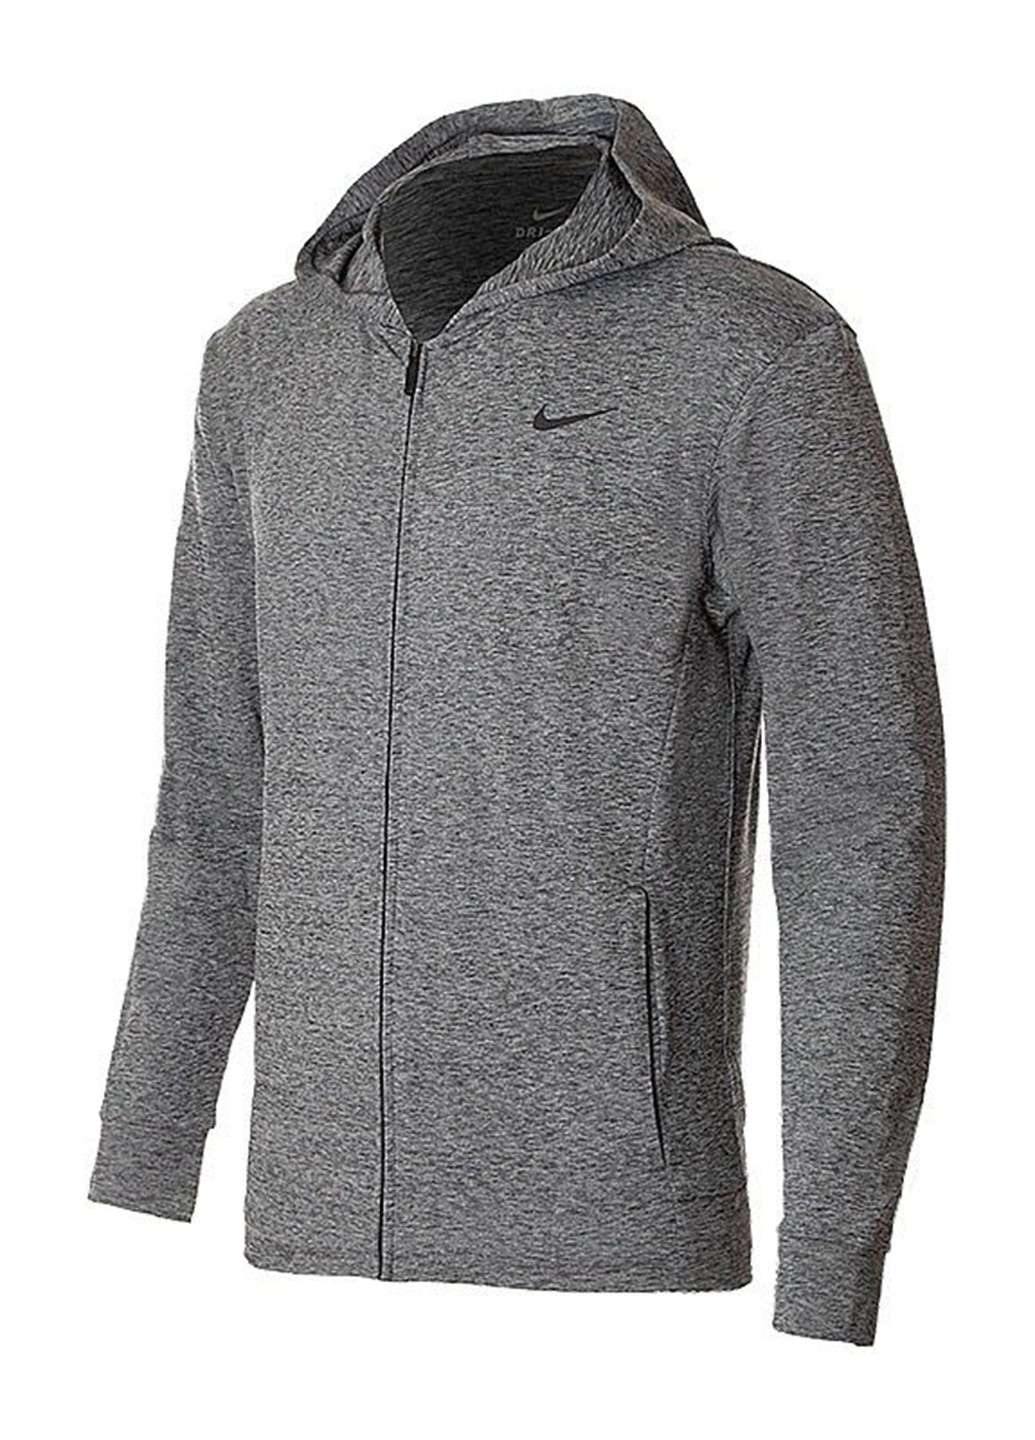 Толстовка Nike m nk dry hoodie fz hprdry lt (199148960)